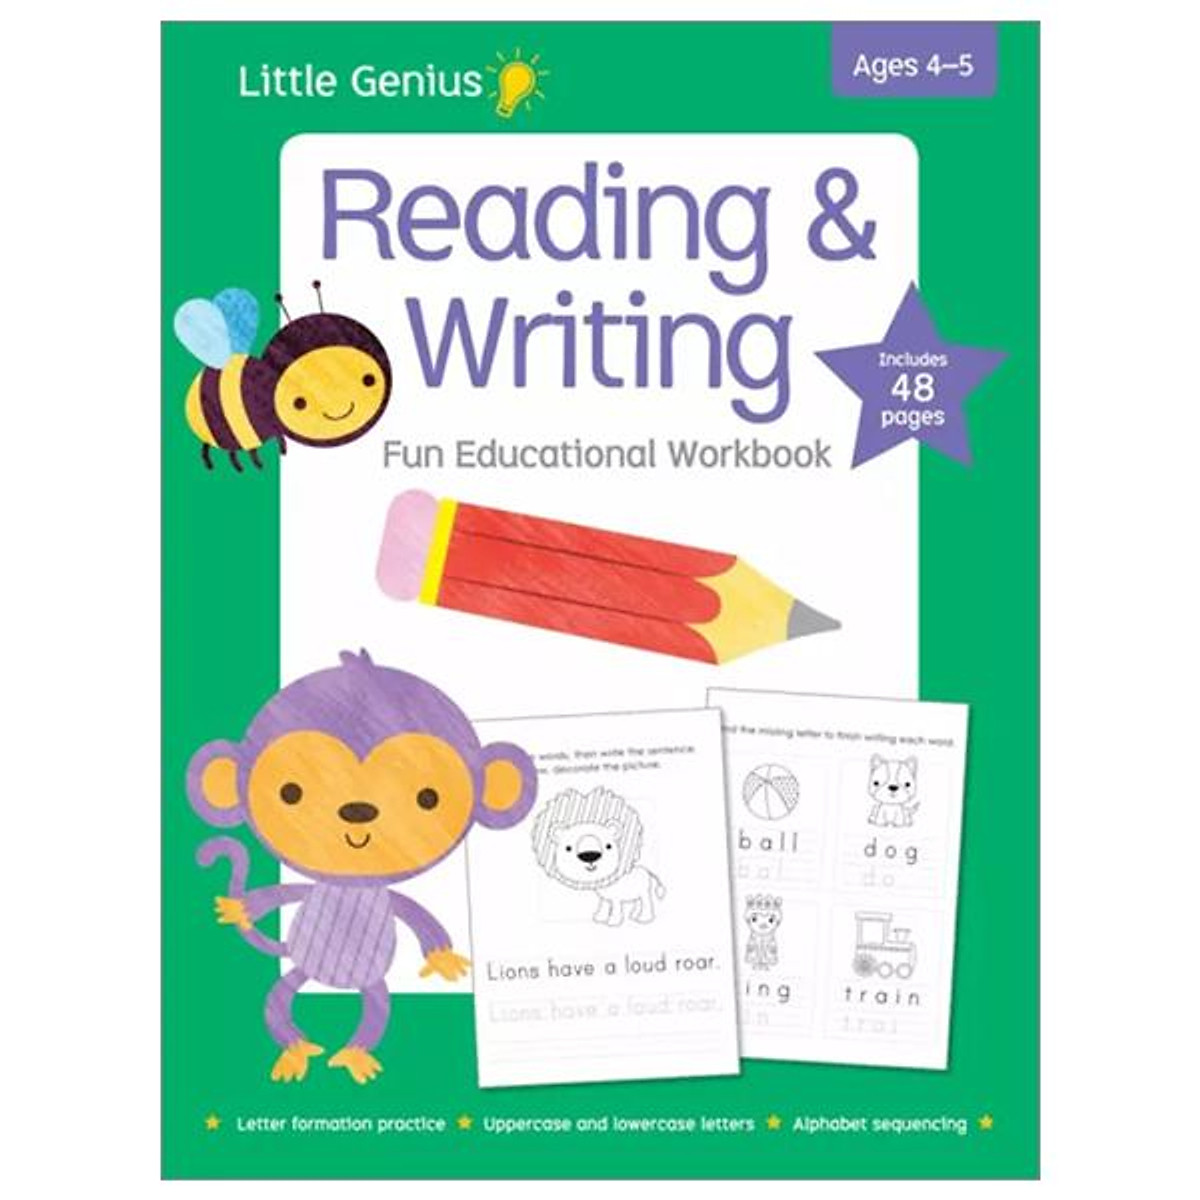 Little Genius: Reading & Writing Fun Educational Workbook